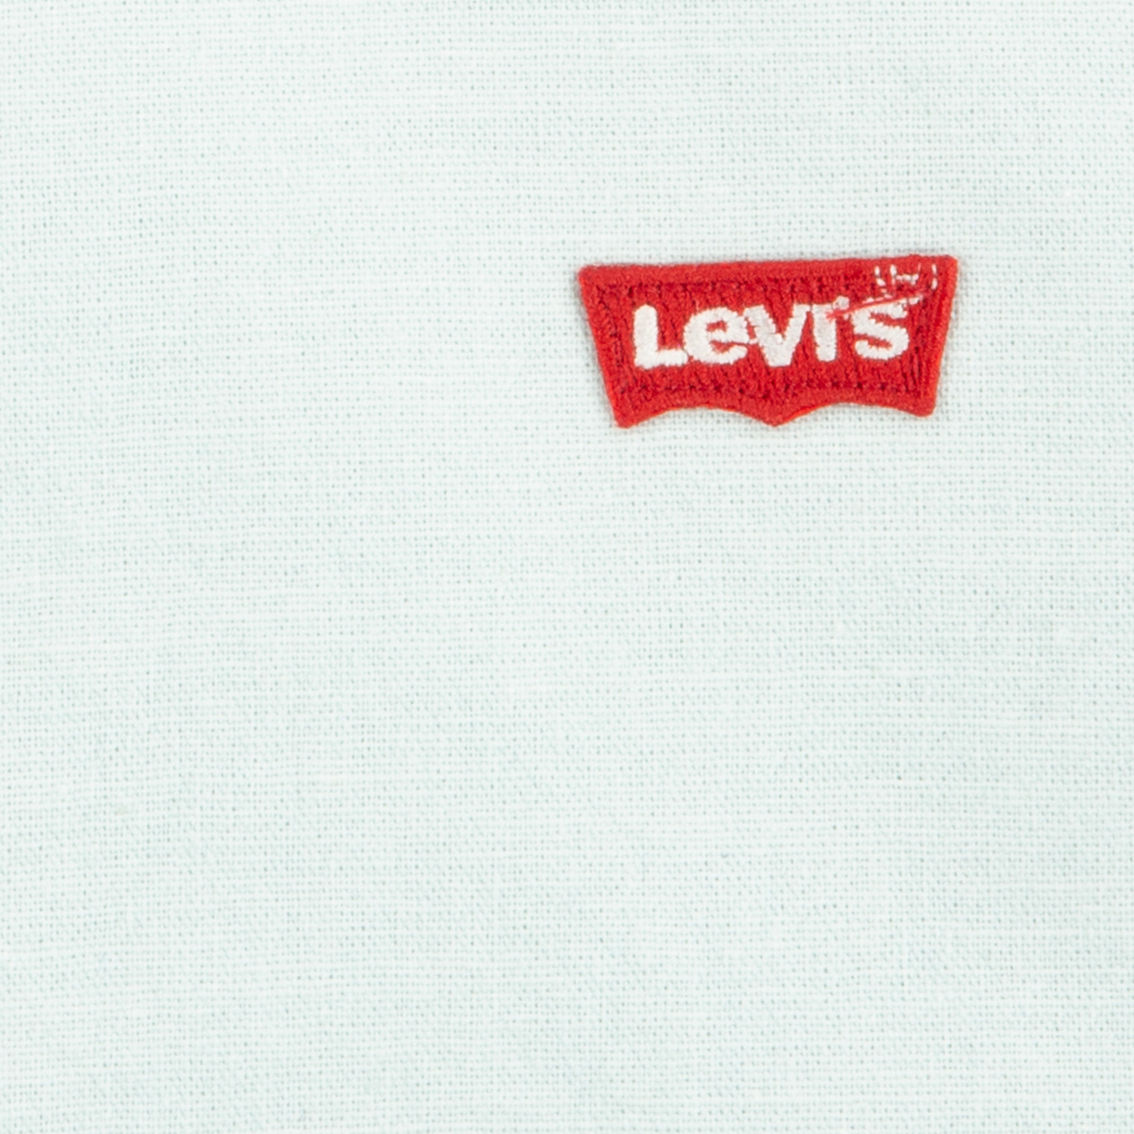 Levi's Boys Woven Shirt - Image 3 of 3